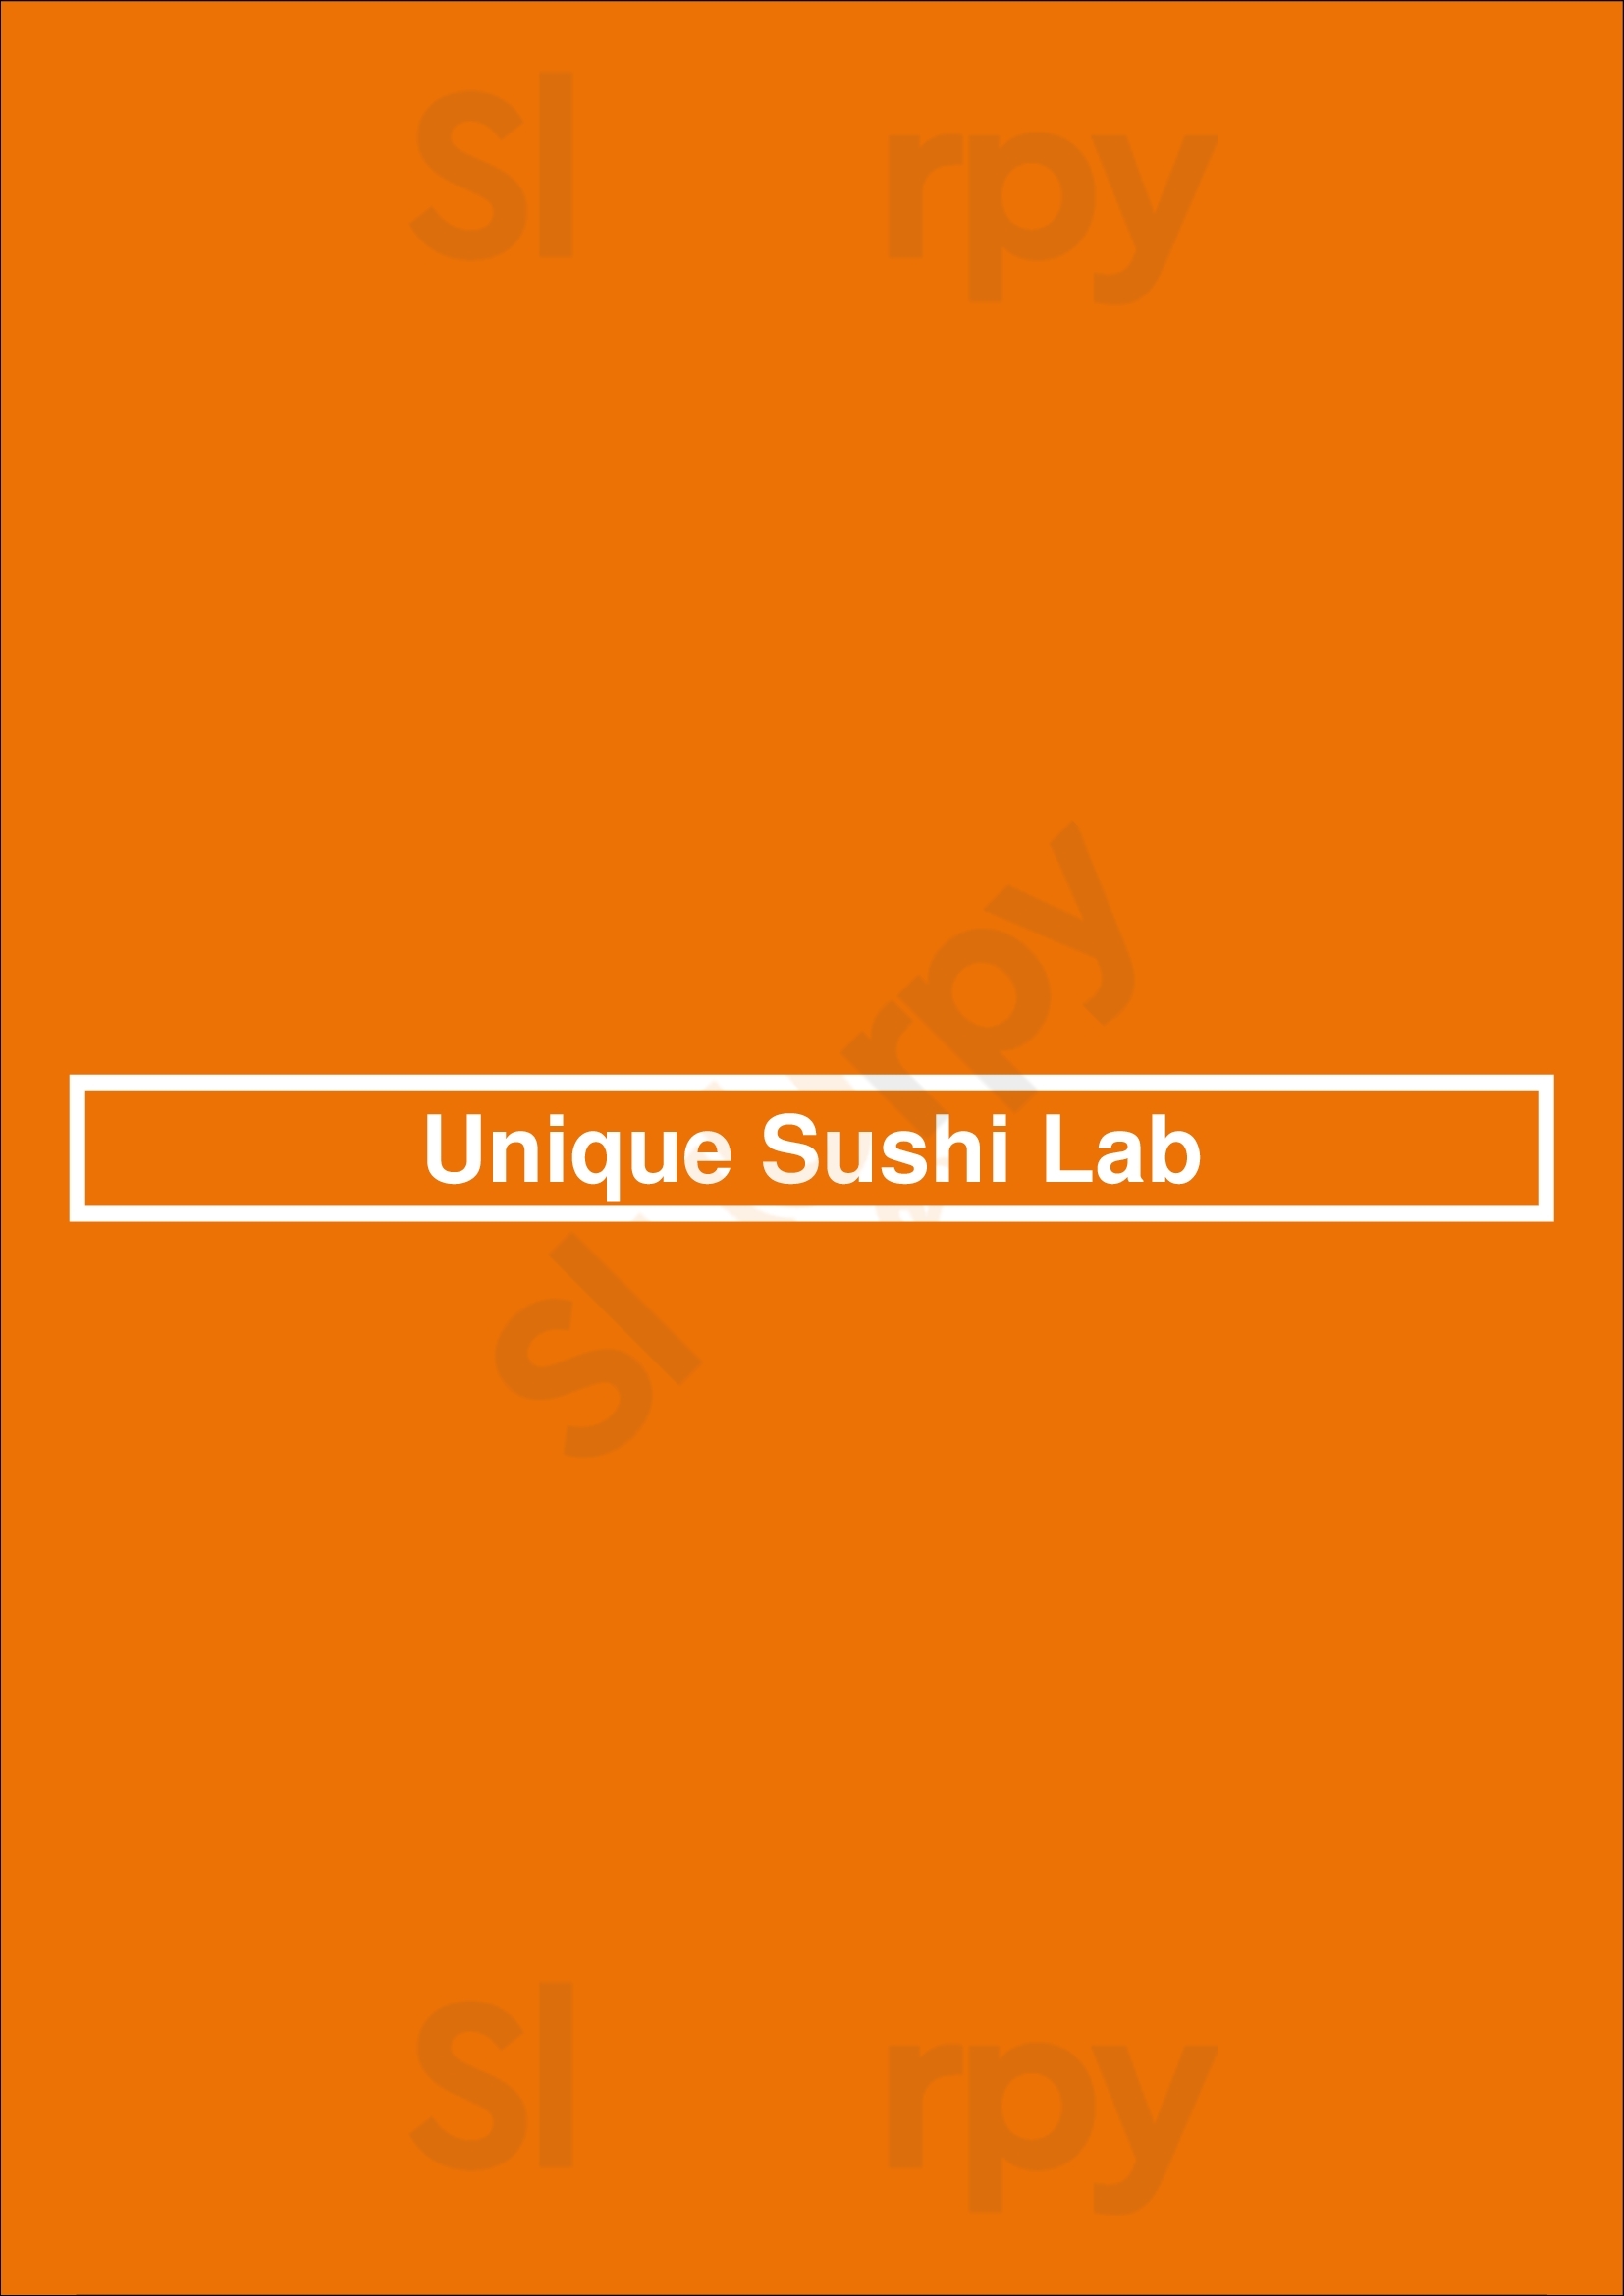 Unique Sushi Lab Lisboa Menu - 1